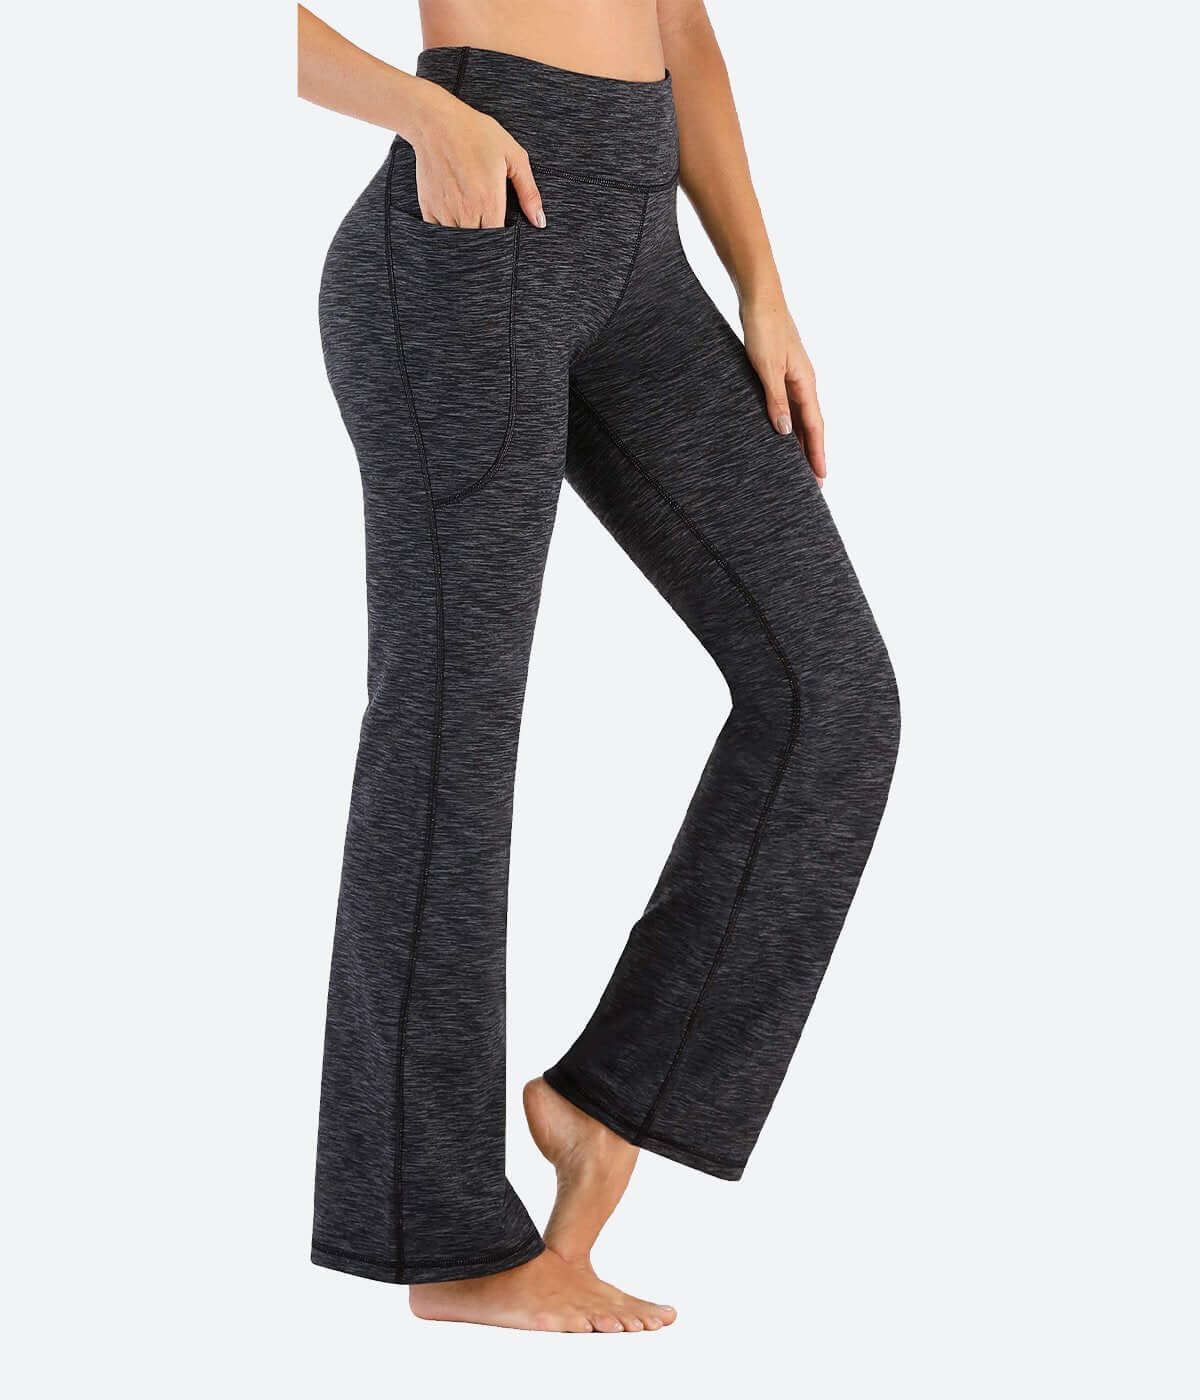 Heathyoga Women Bootcut High Waist Yoga Pants with Pockets, Gray, XX-Large